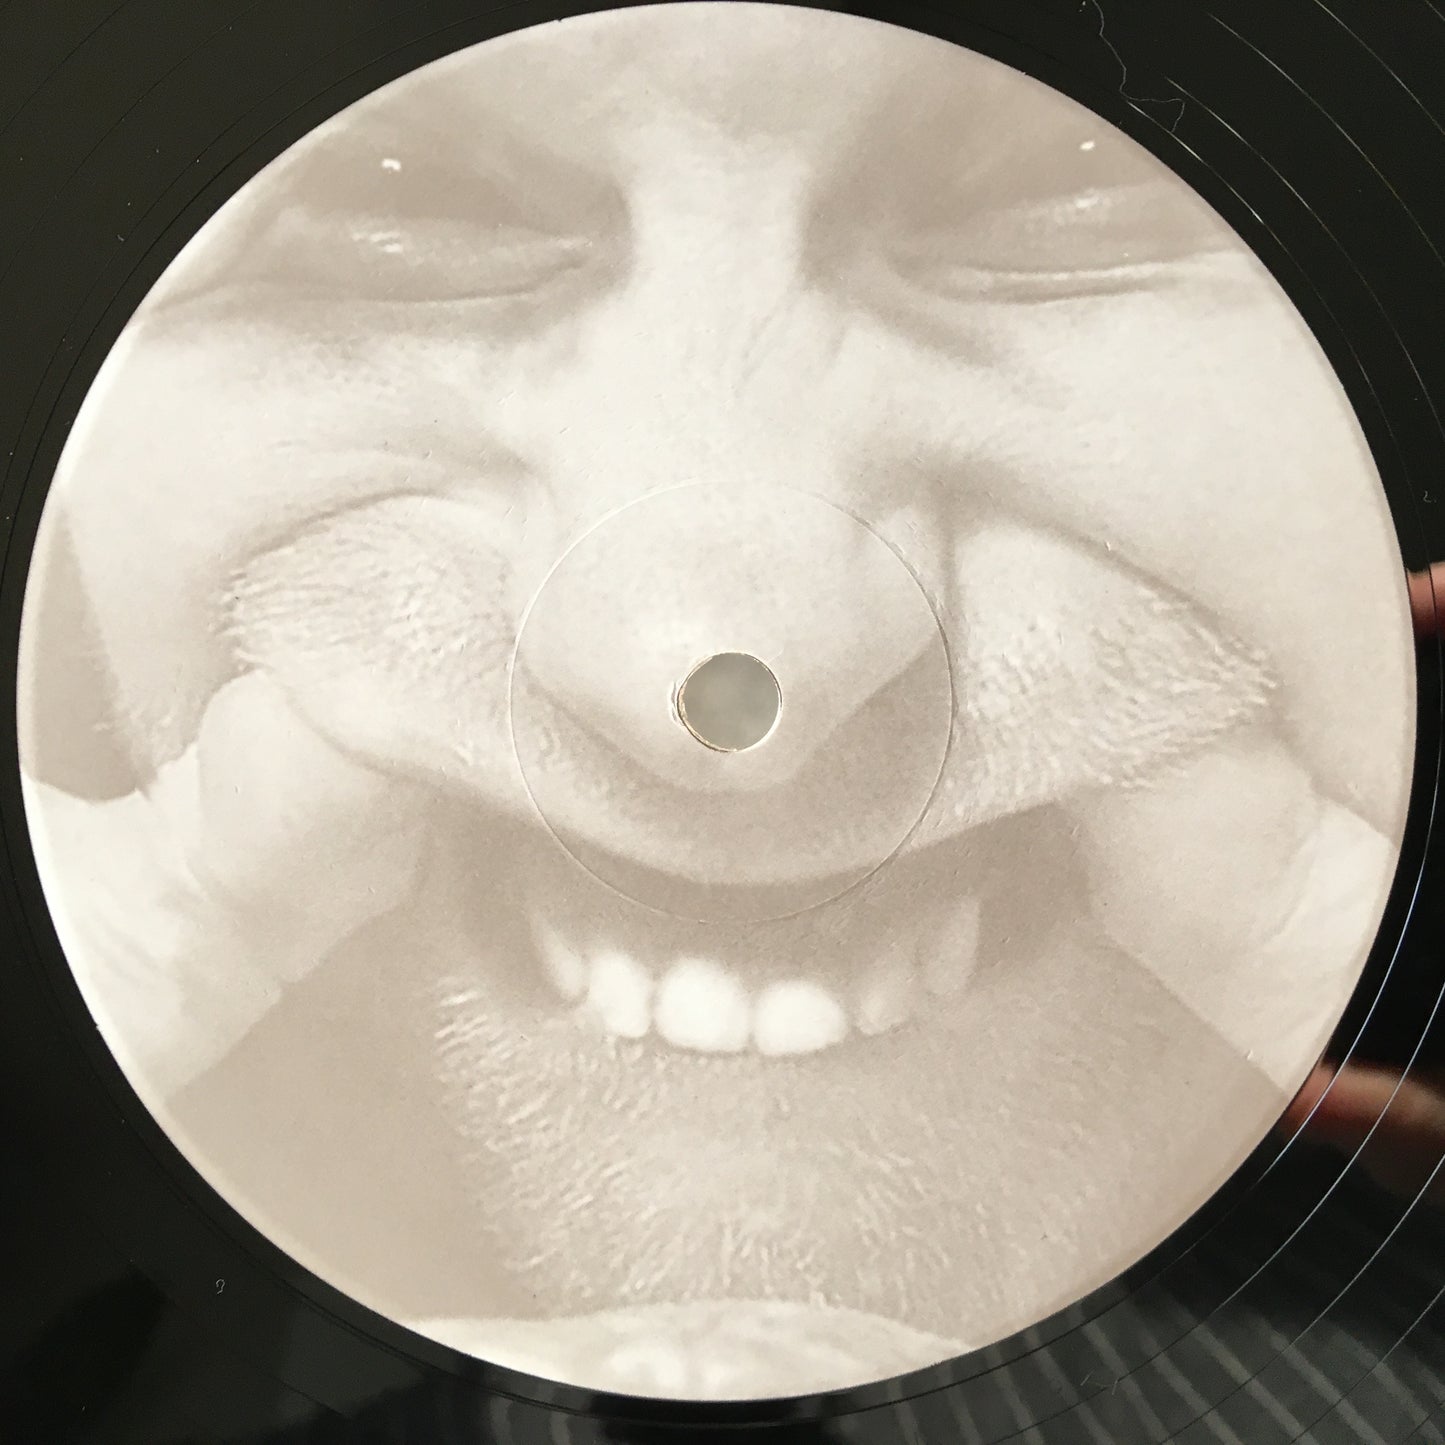 Aphex Twin – 在 12" 上混合 2 台现金